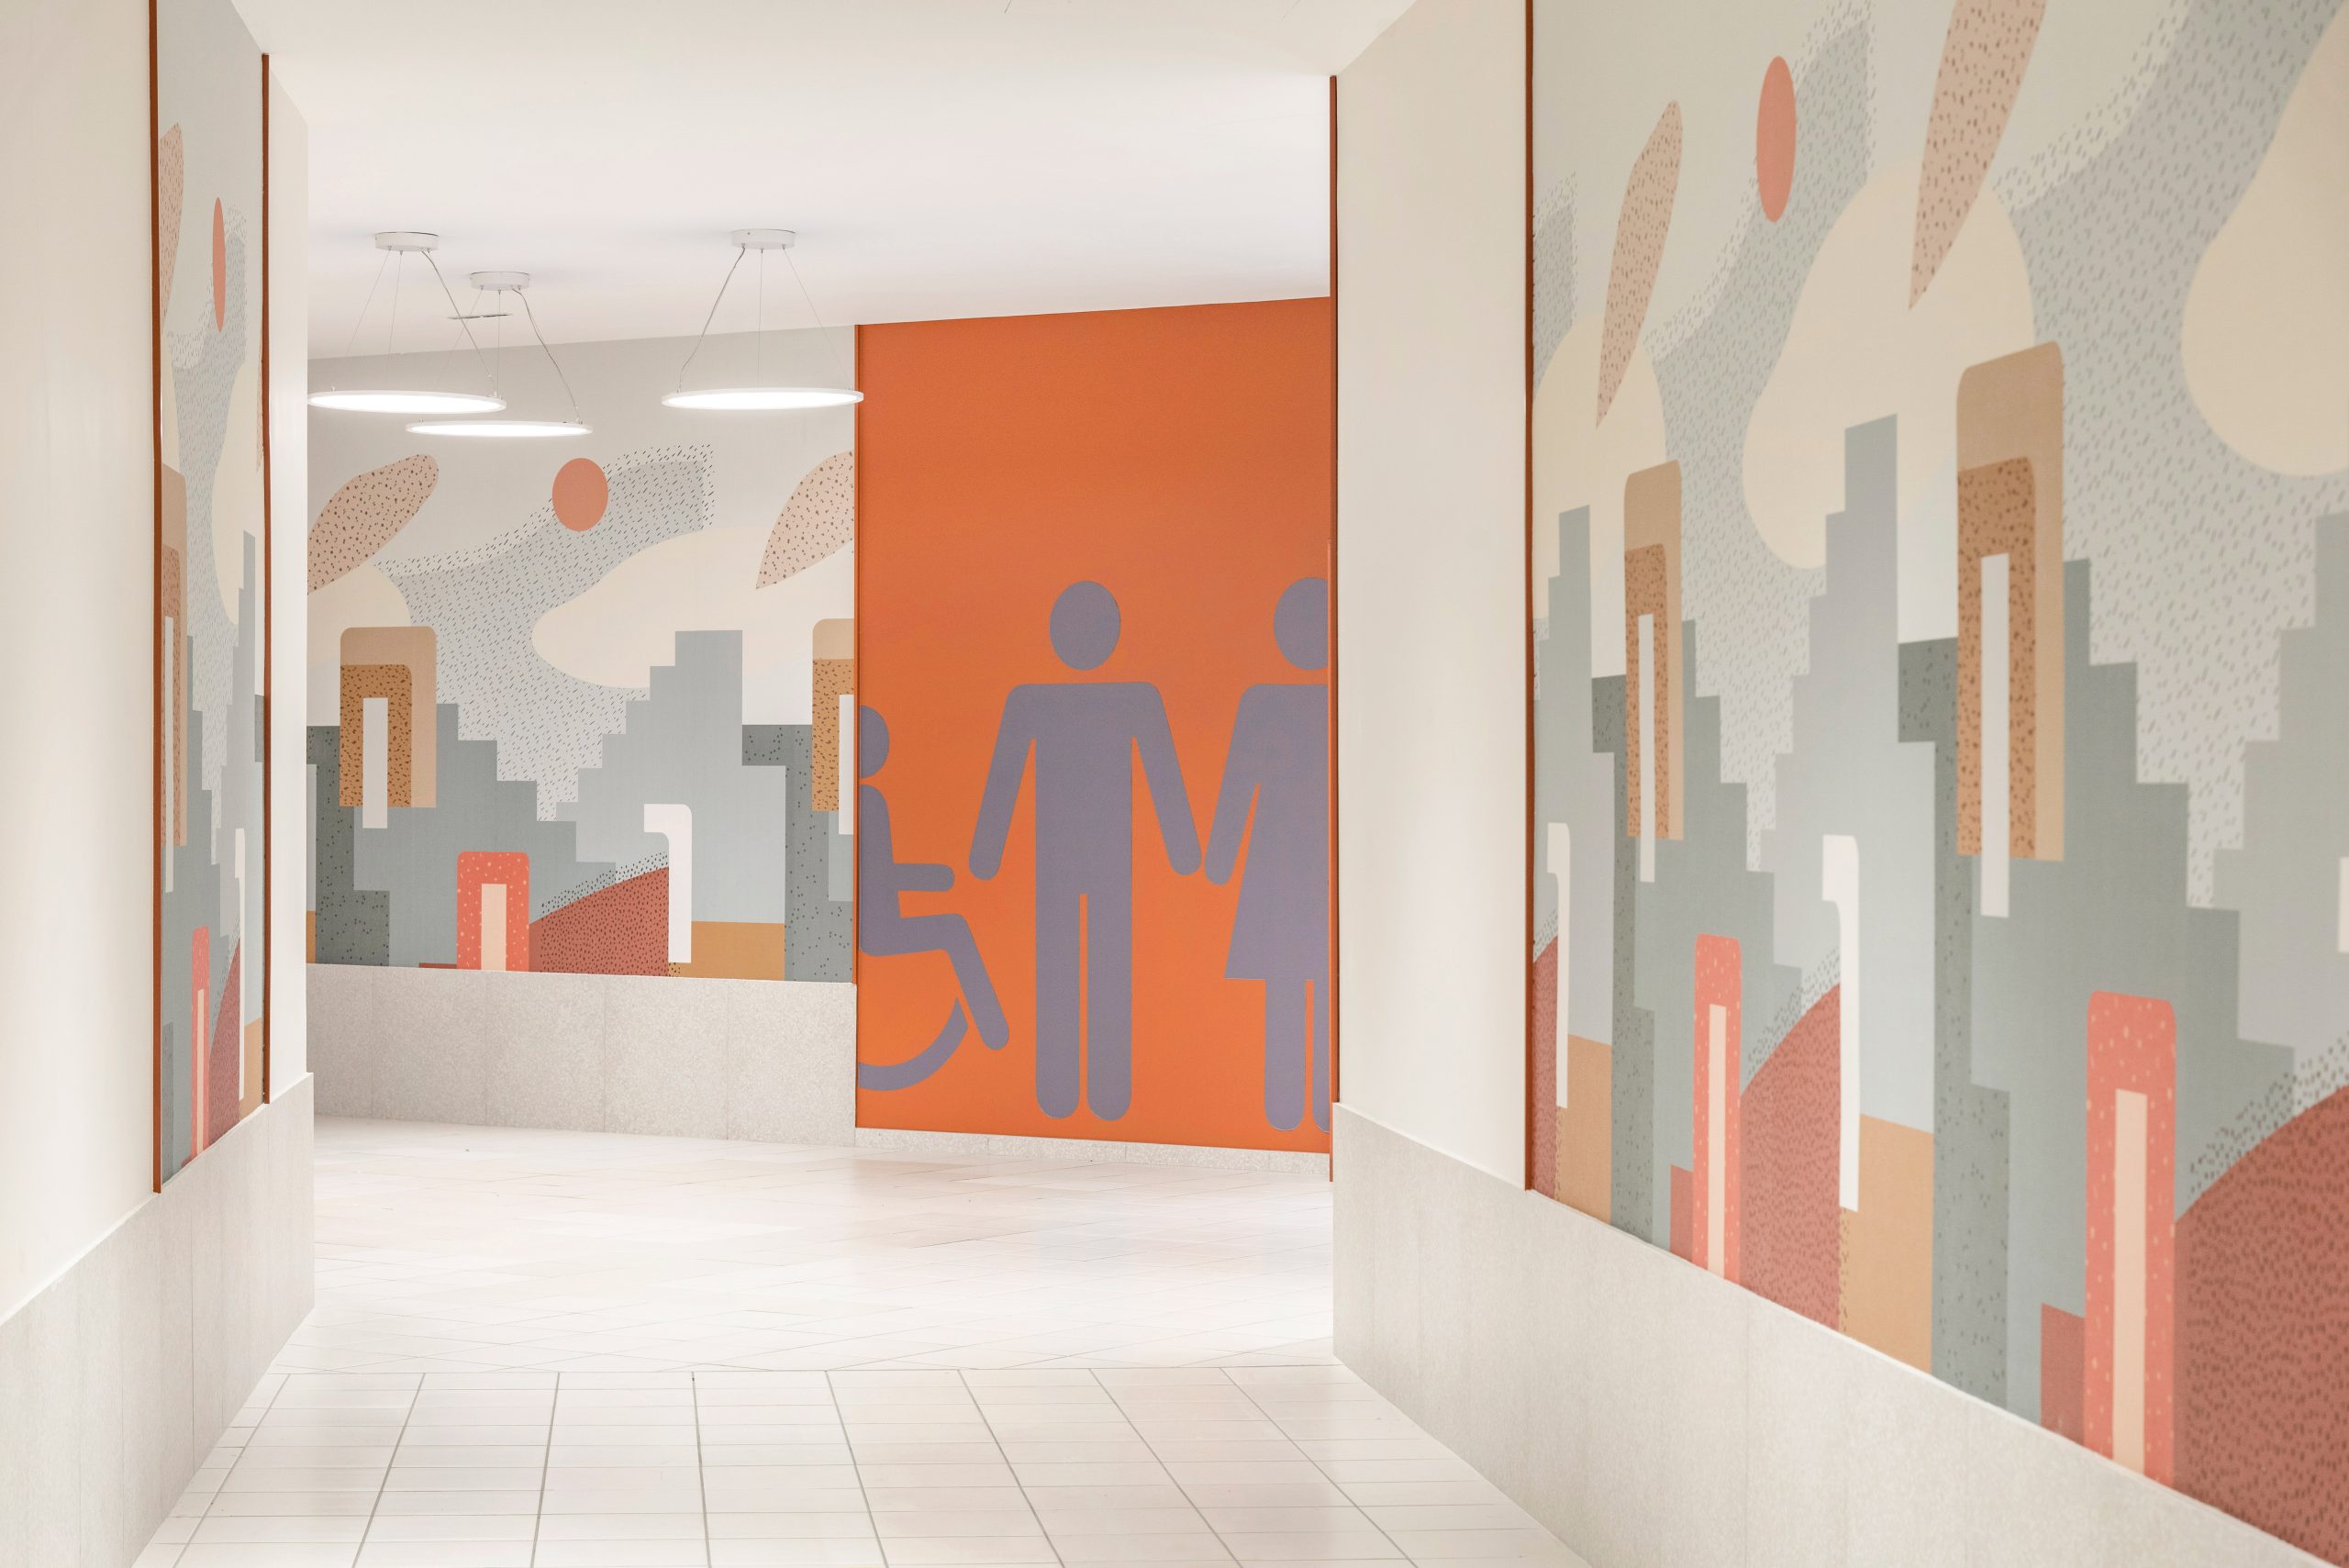 Wall graphics at Centro Leonardo shopping center Fiumicino